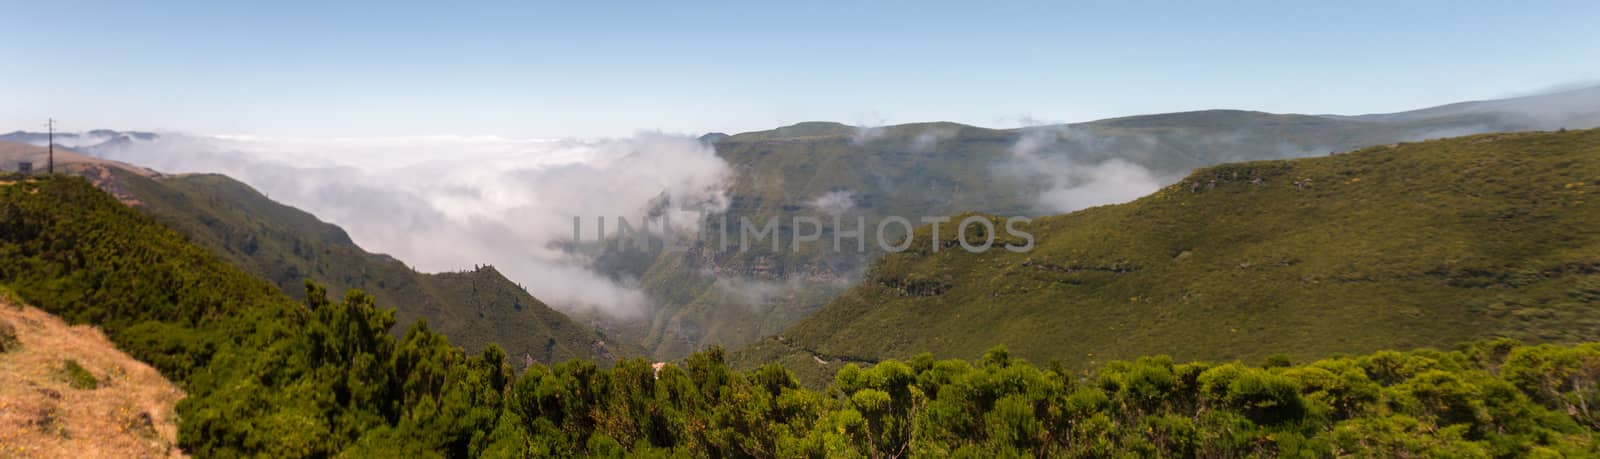 Panorama of Madeira island landscape by membio